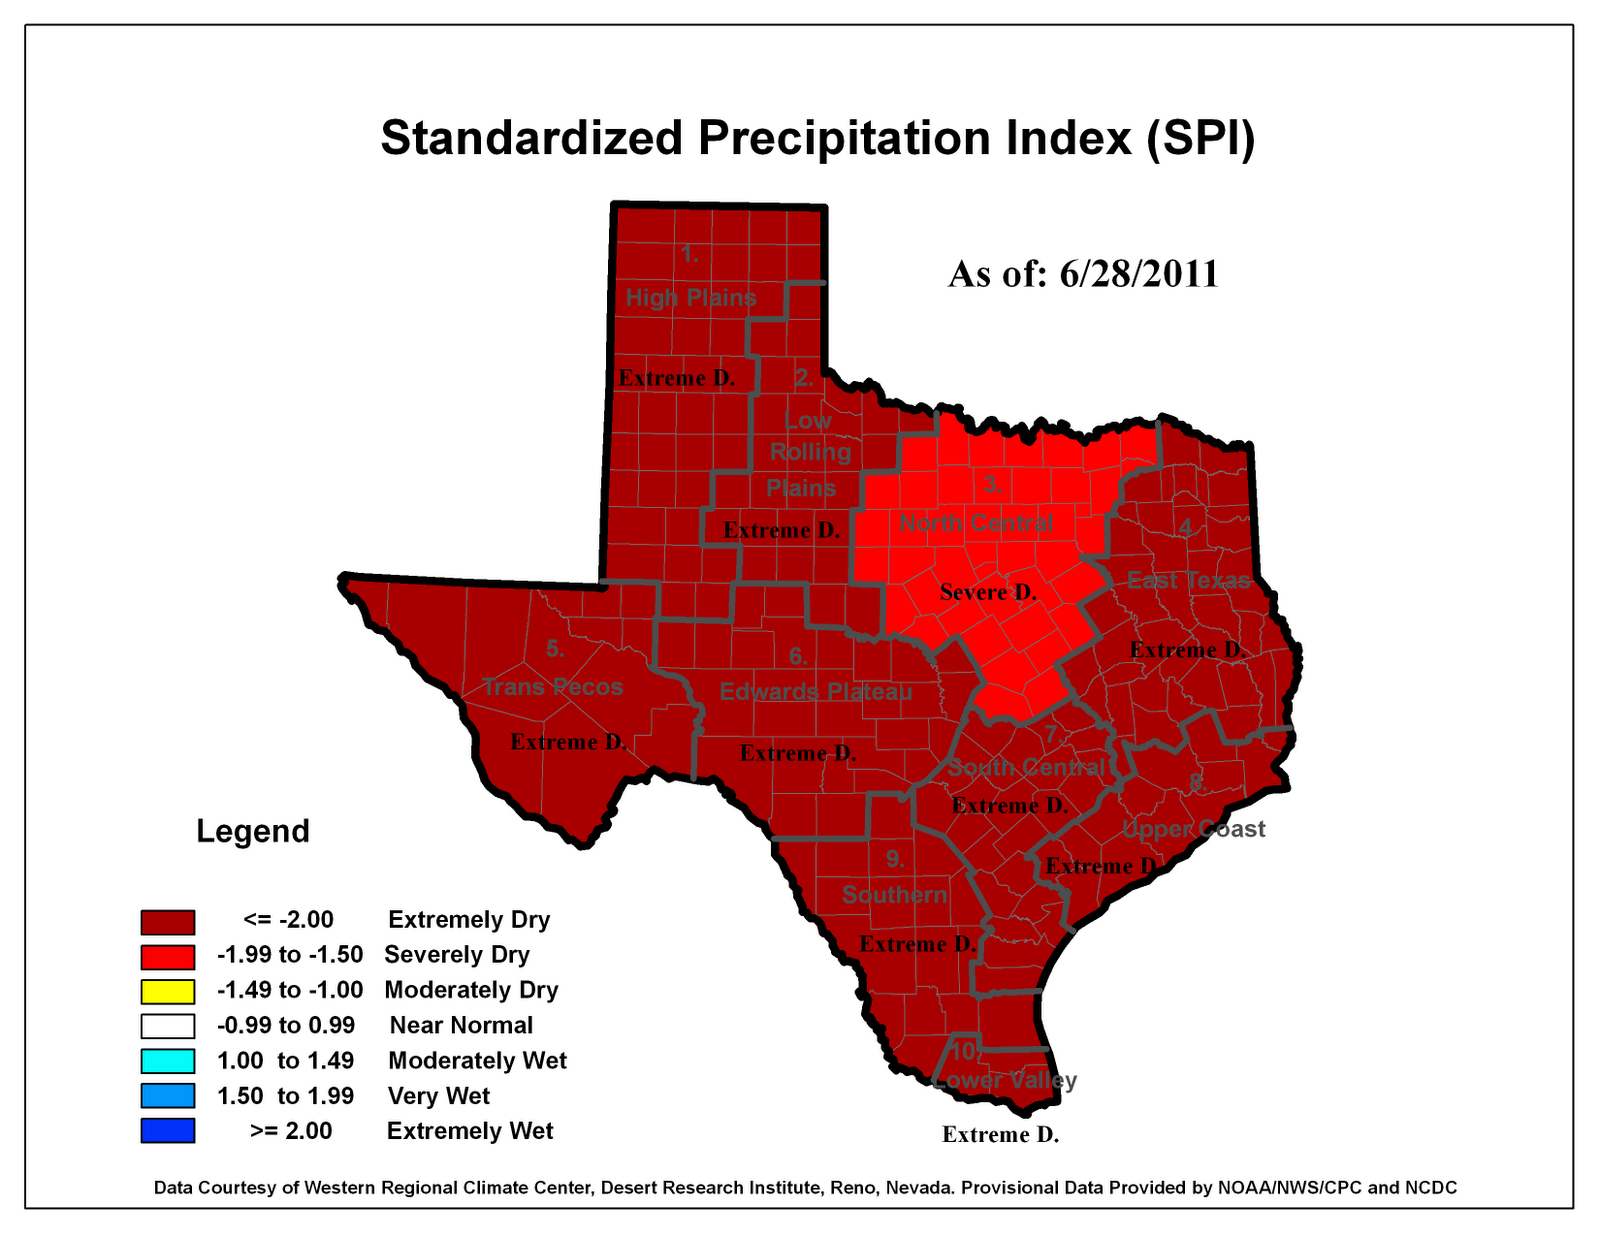 DROUGHT MONITOR Texas Water Development Board Drought Maps